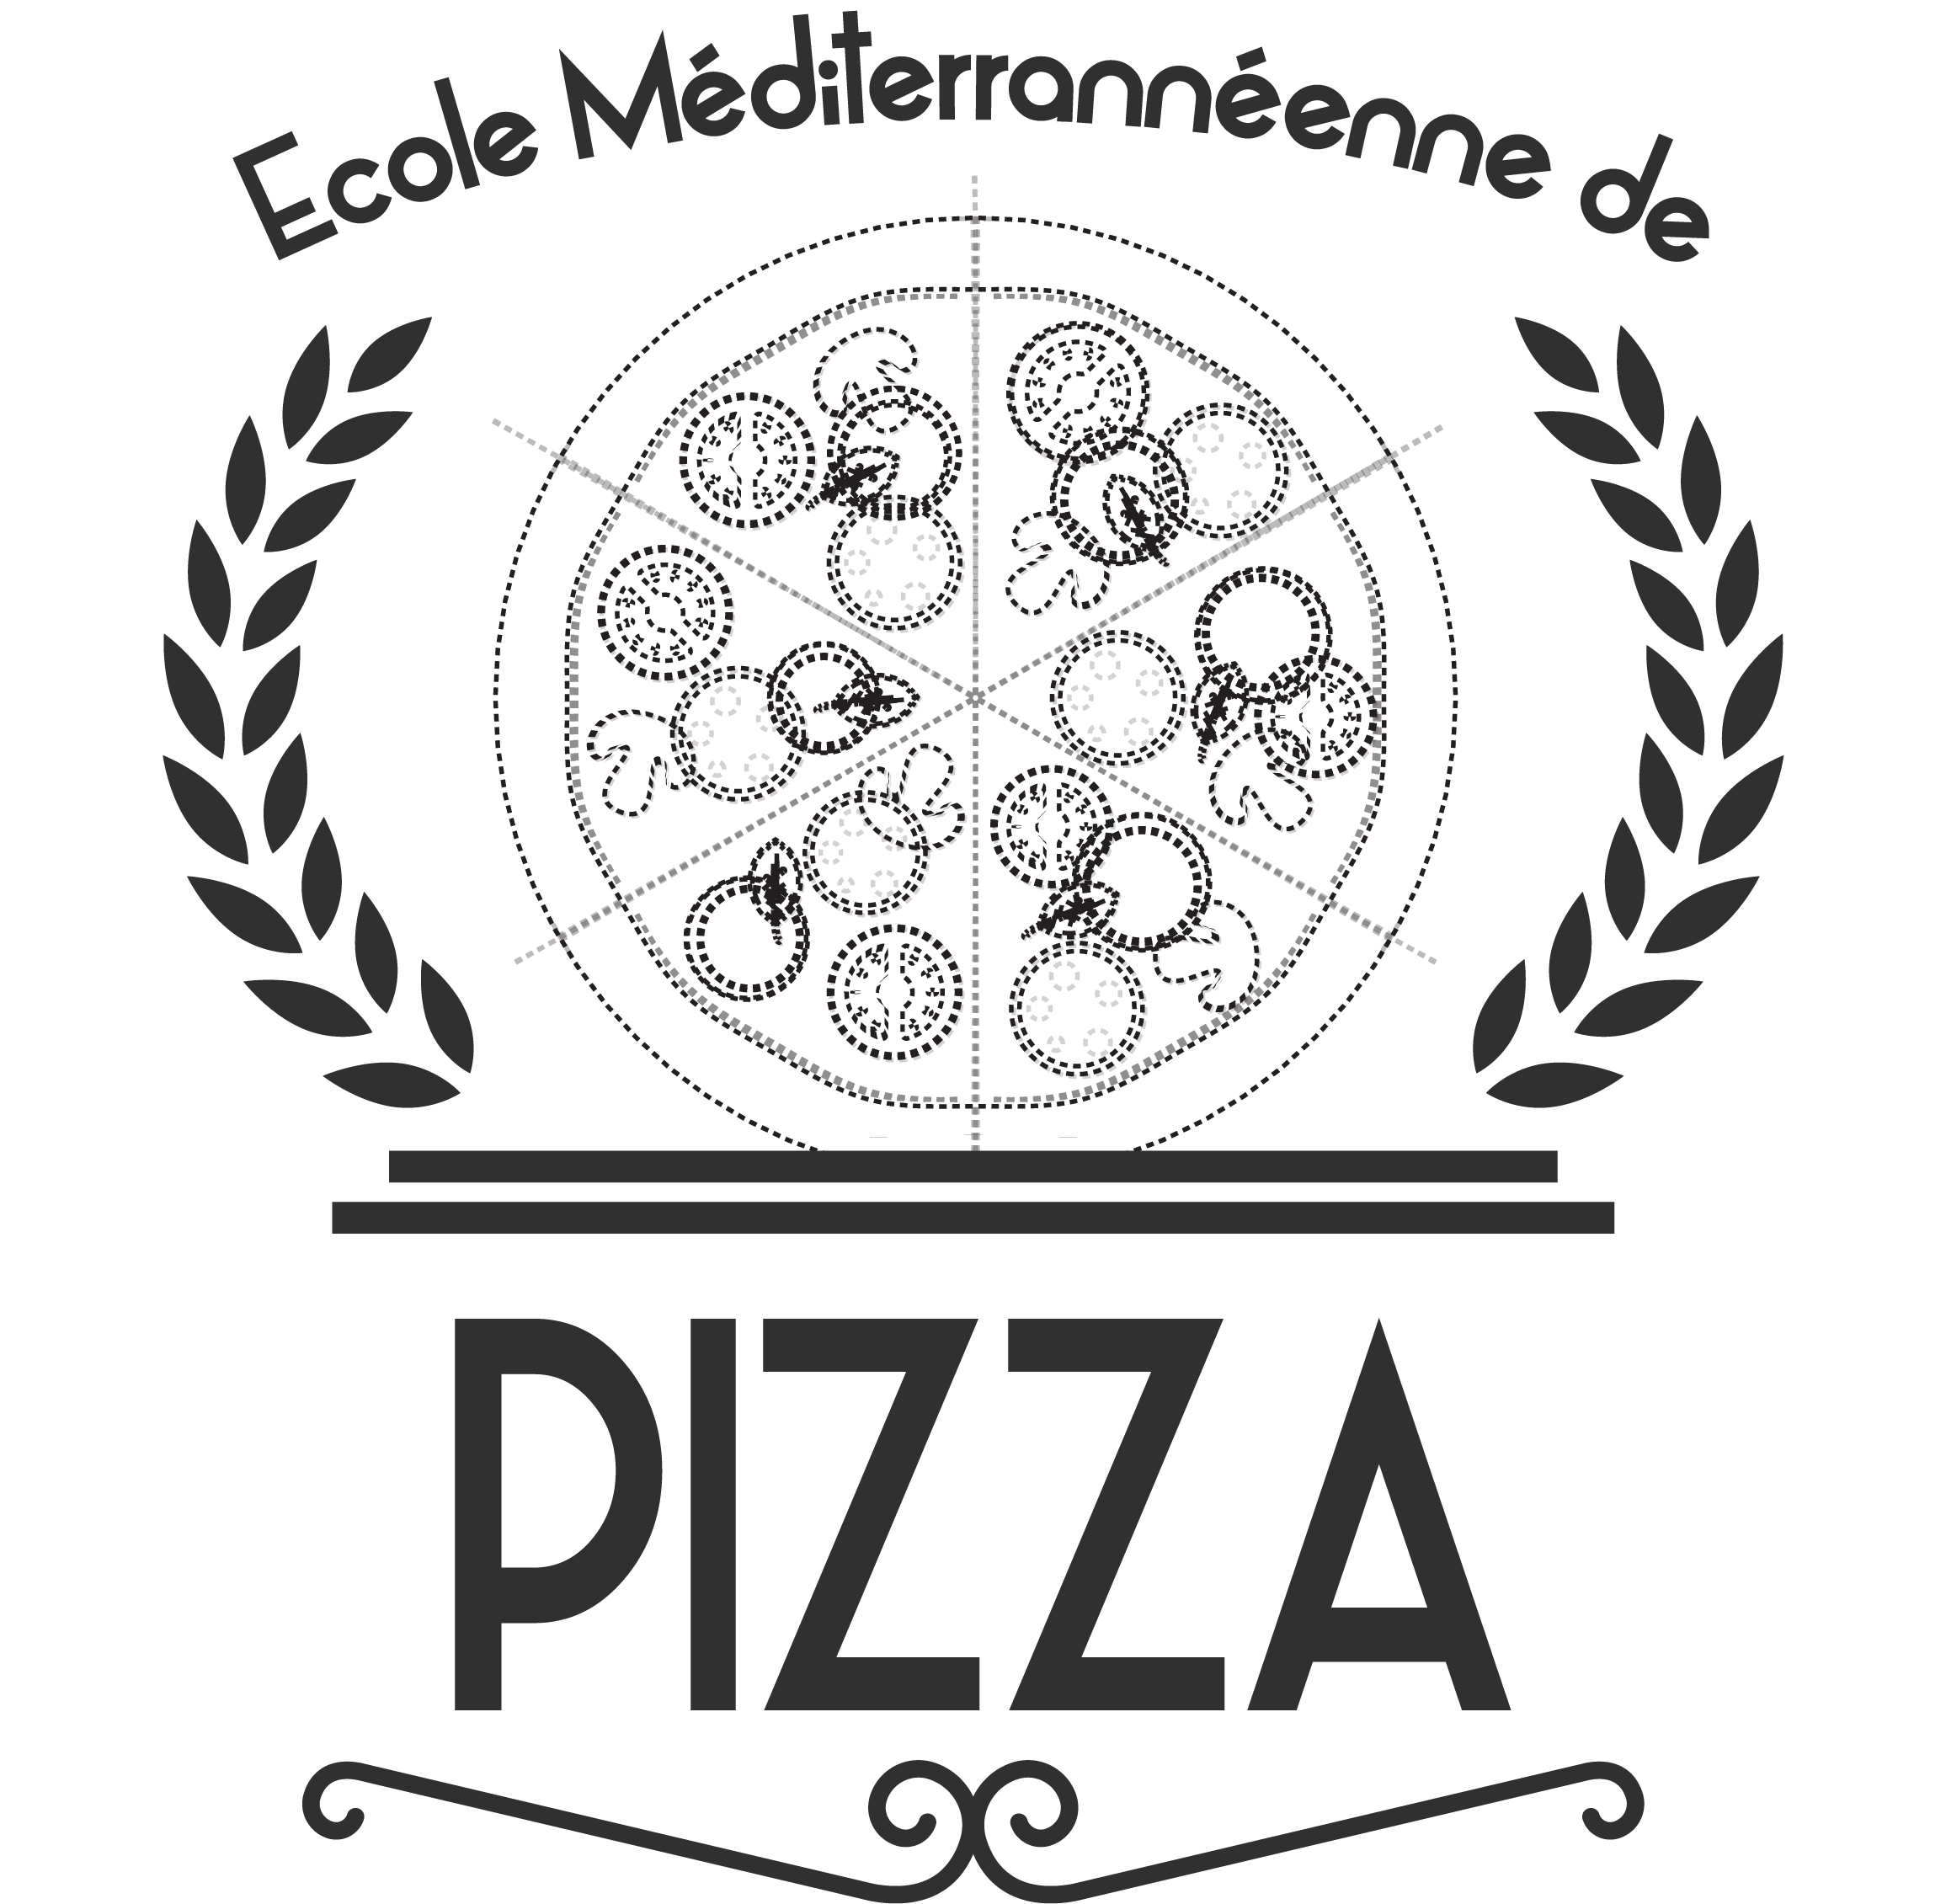 Ecole méditerranéenne de pizza